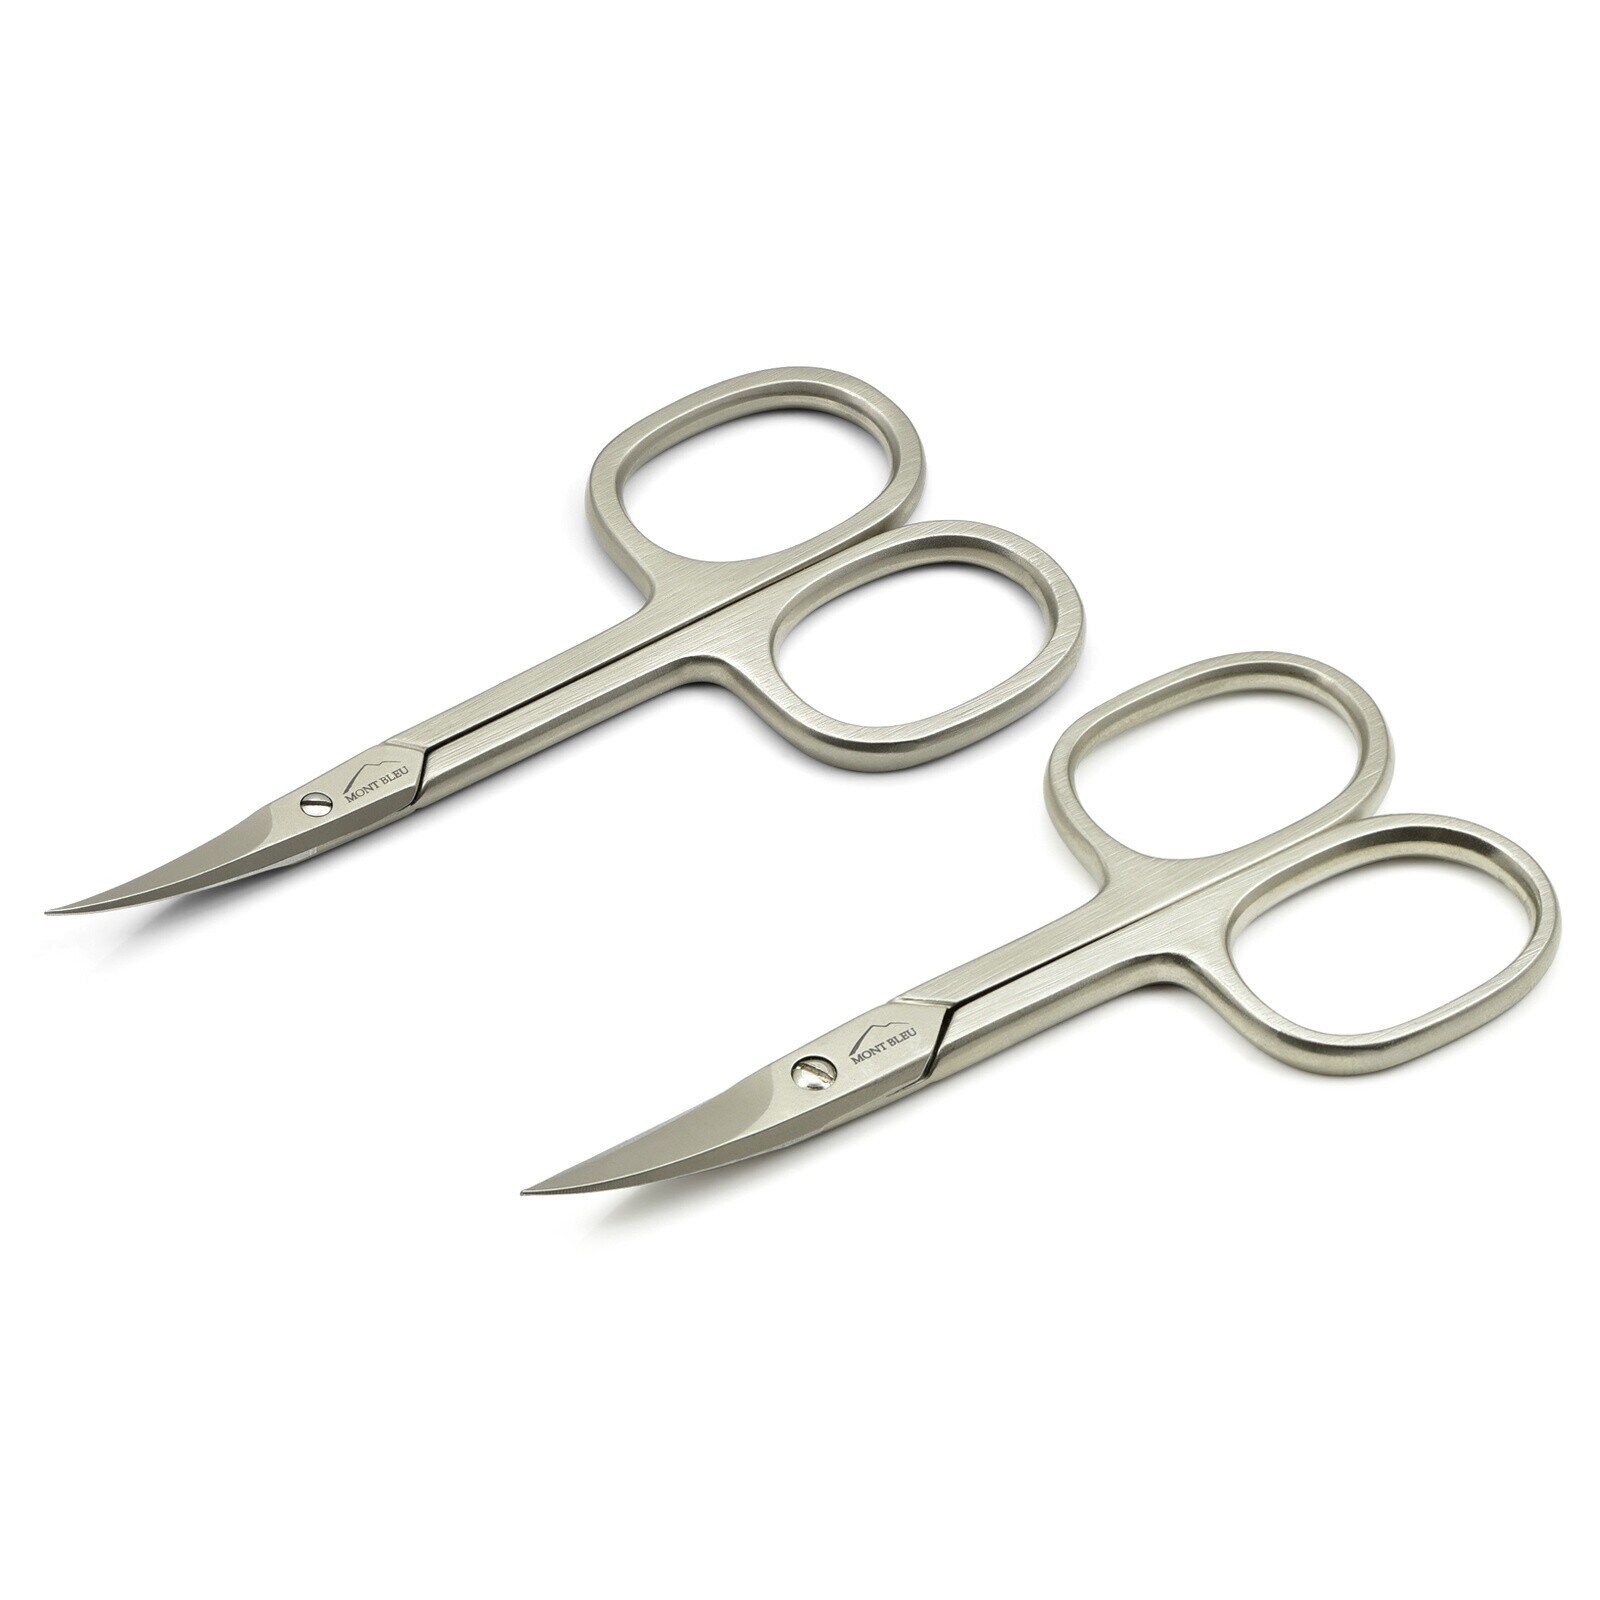 Buy wholesale Manicure scissors, dark blue